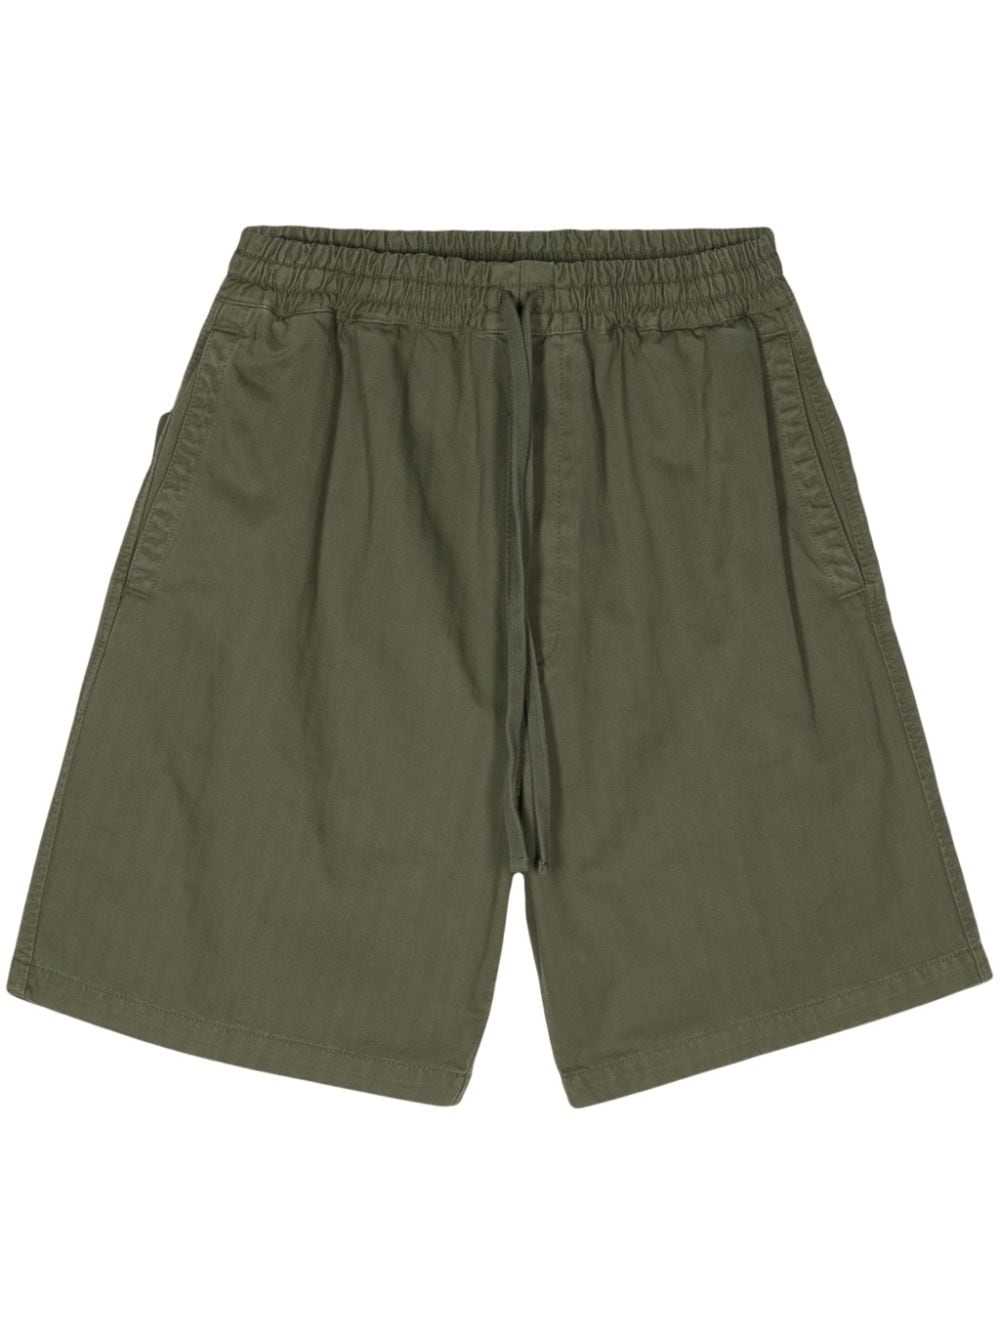 Carhartt WIP Rainer herringbone drawstring shorts - Green von Carhartt WIP